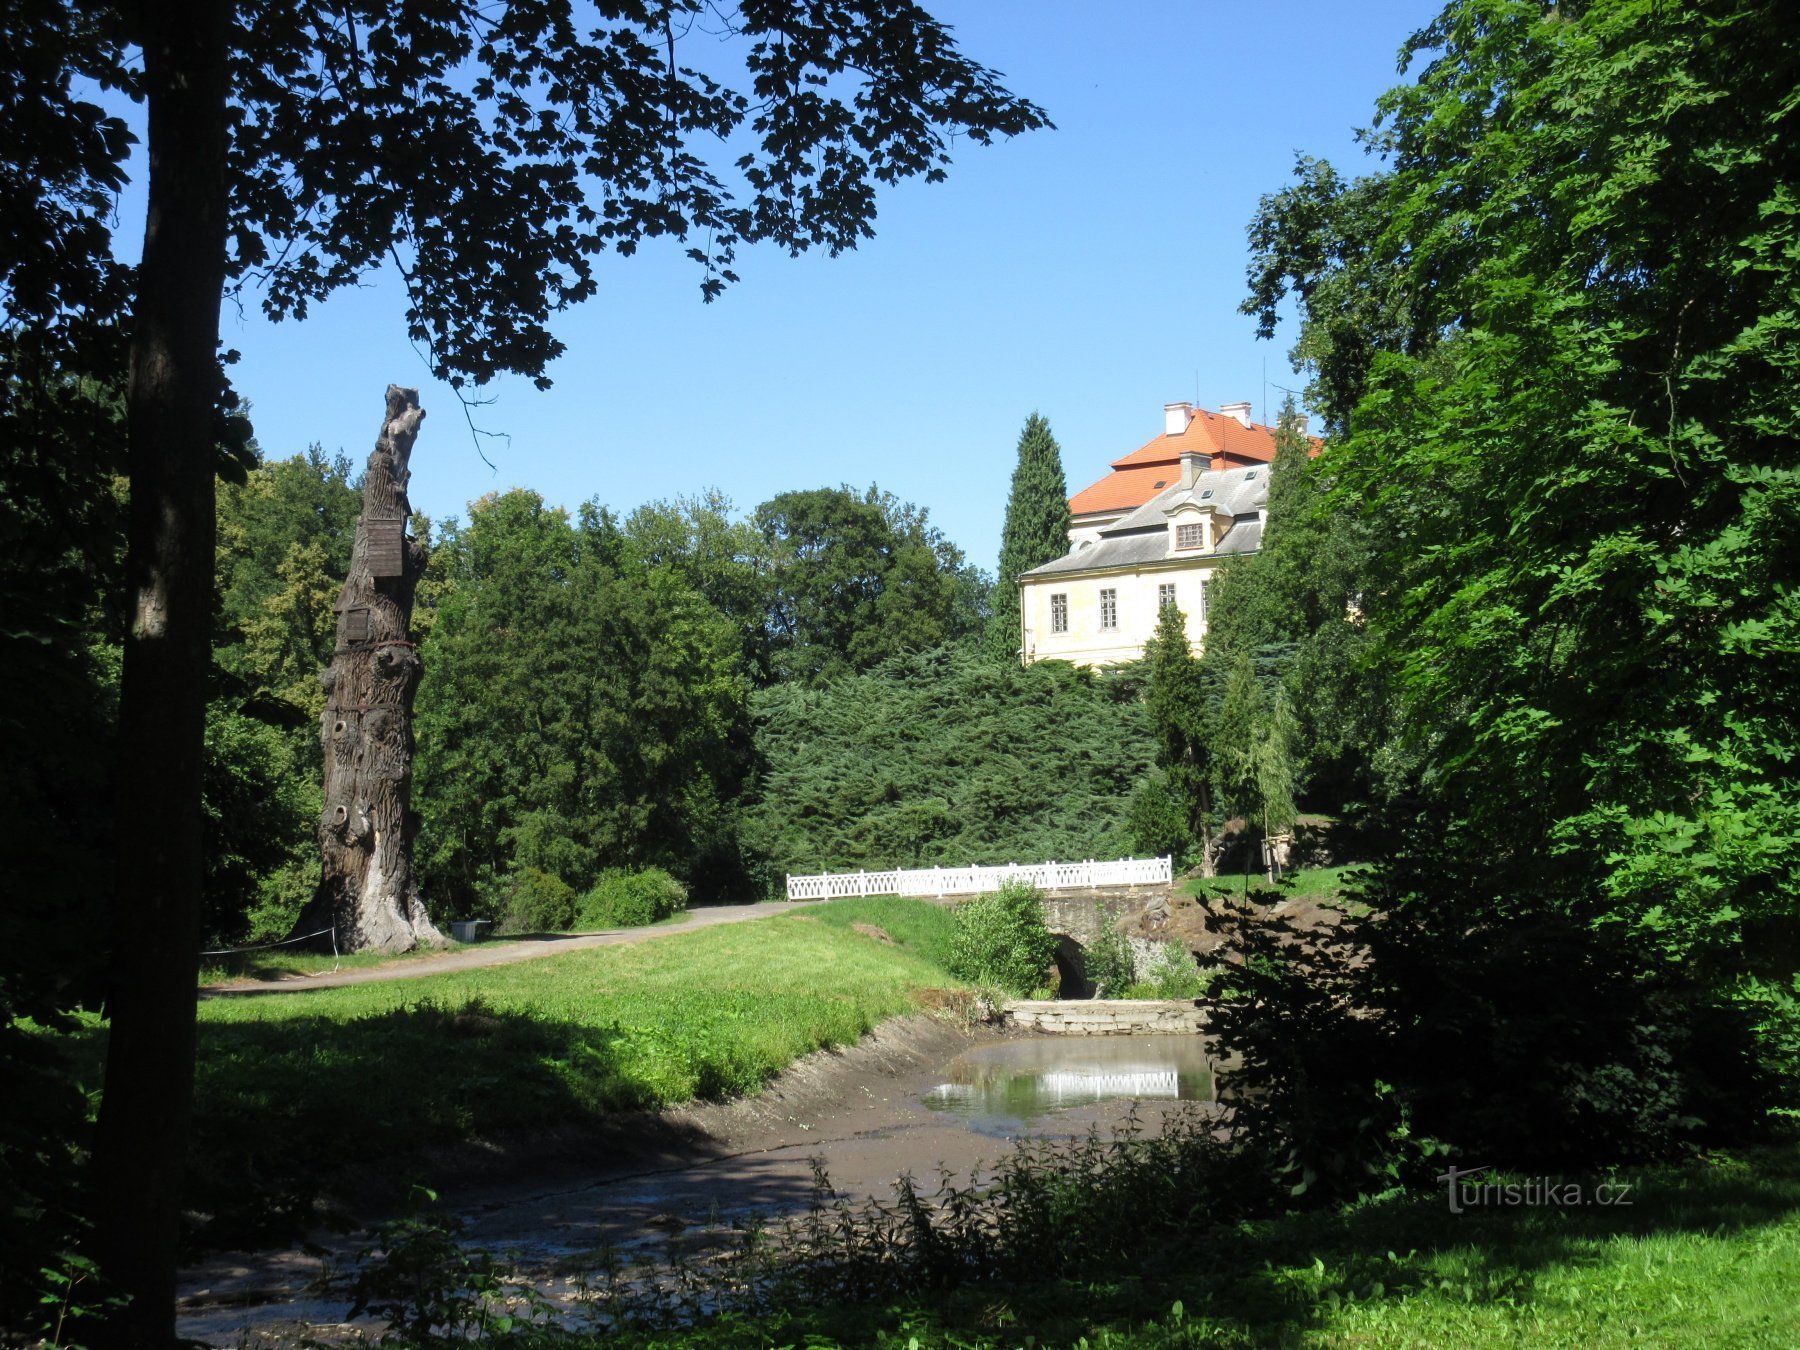 Castle and Goethe's Oak